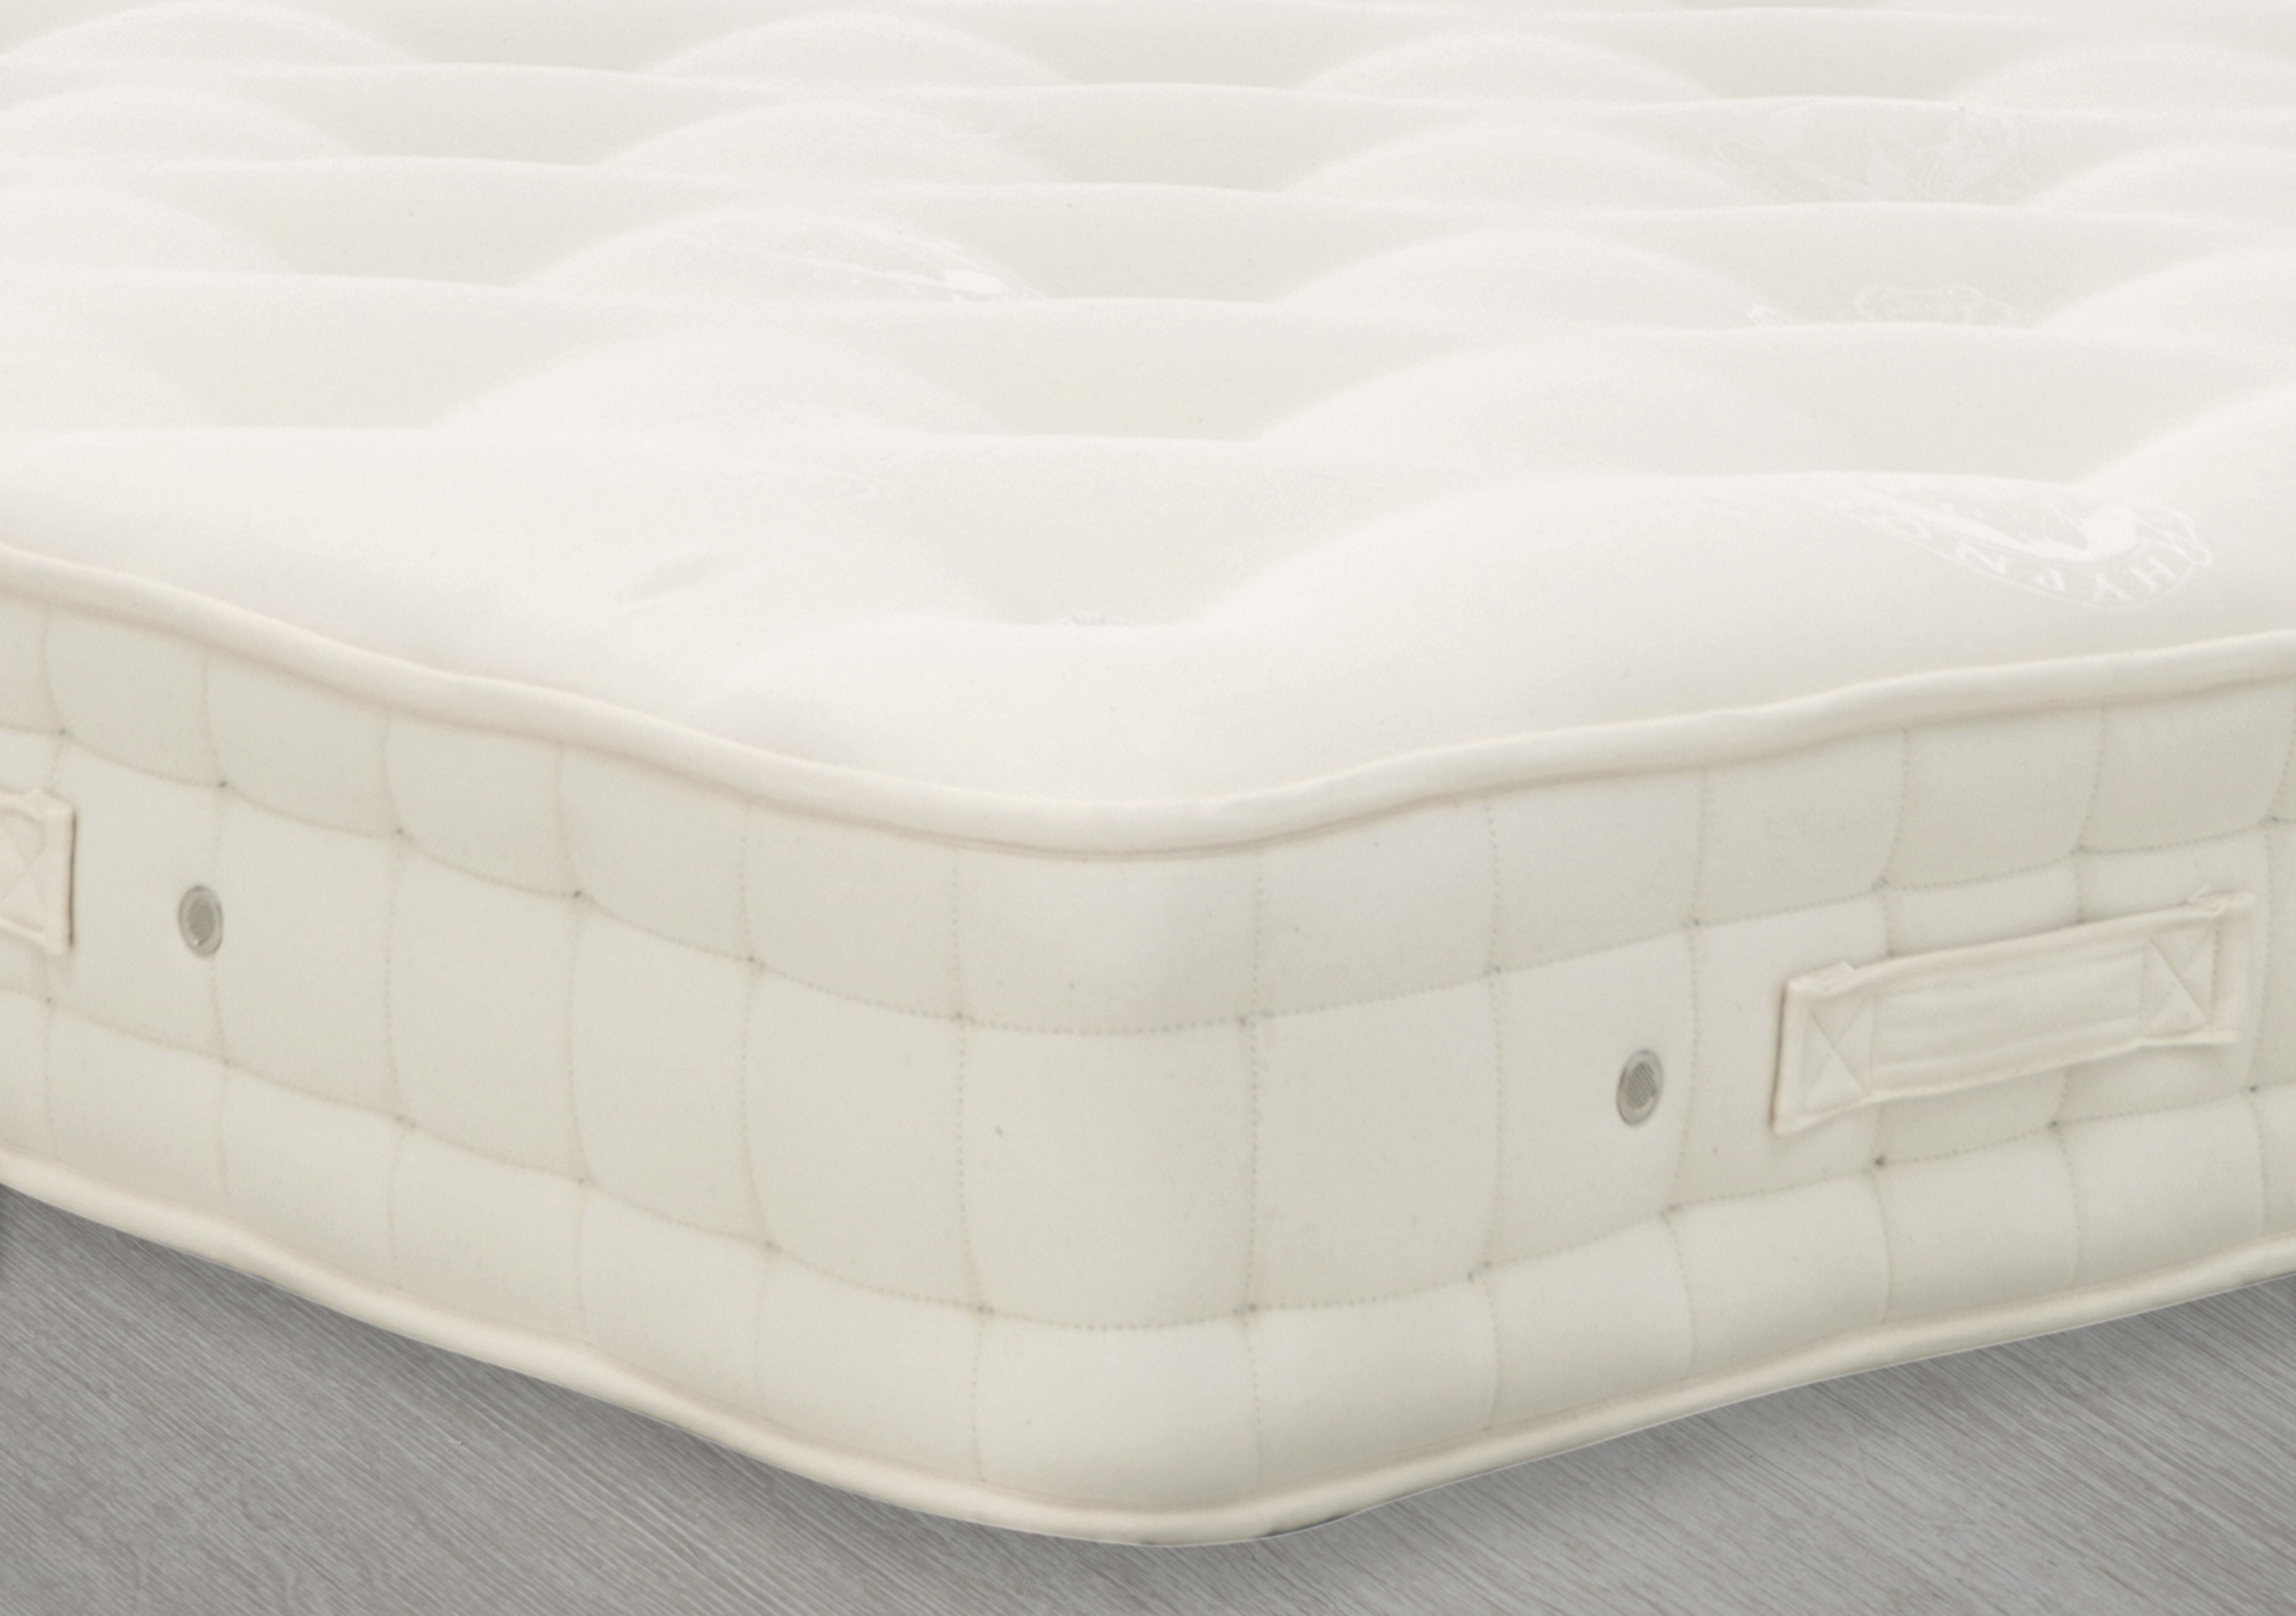 bespoke collection mattress review